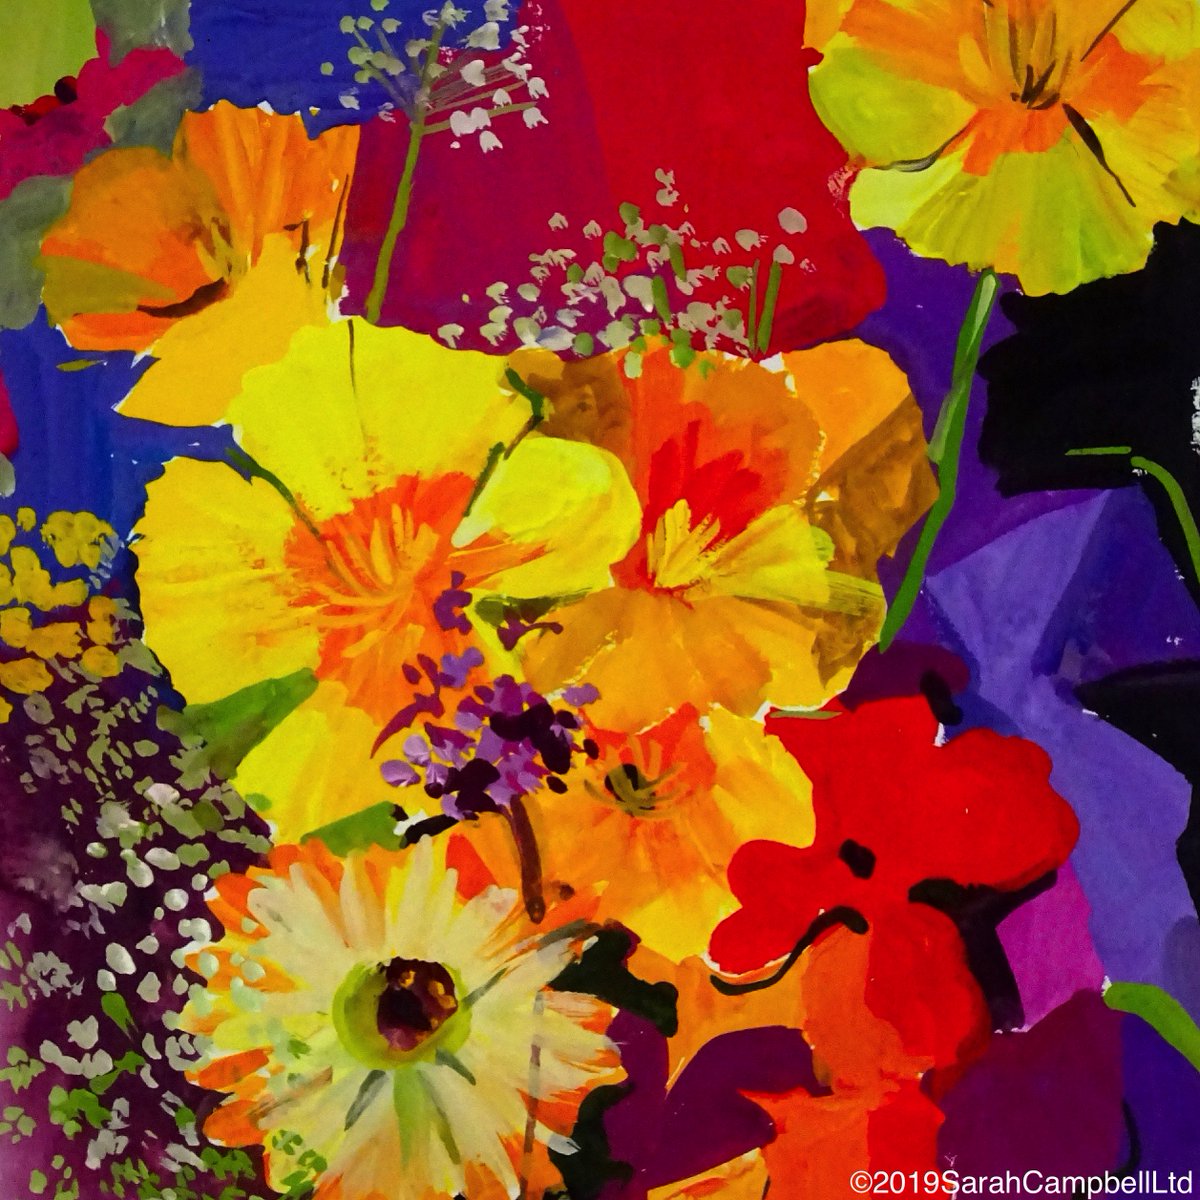 Sunday flowers, Monday sketch
#pickofthebunch #allotmentflowers #californiapoppies #nasturtium #sweetpeas #calendula #coriander #gouache #colourglows #joyful